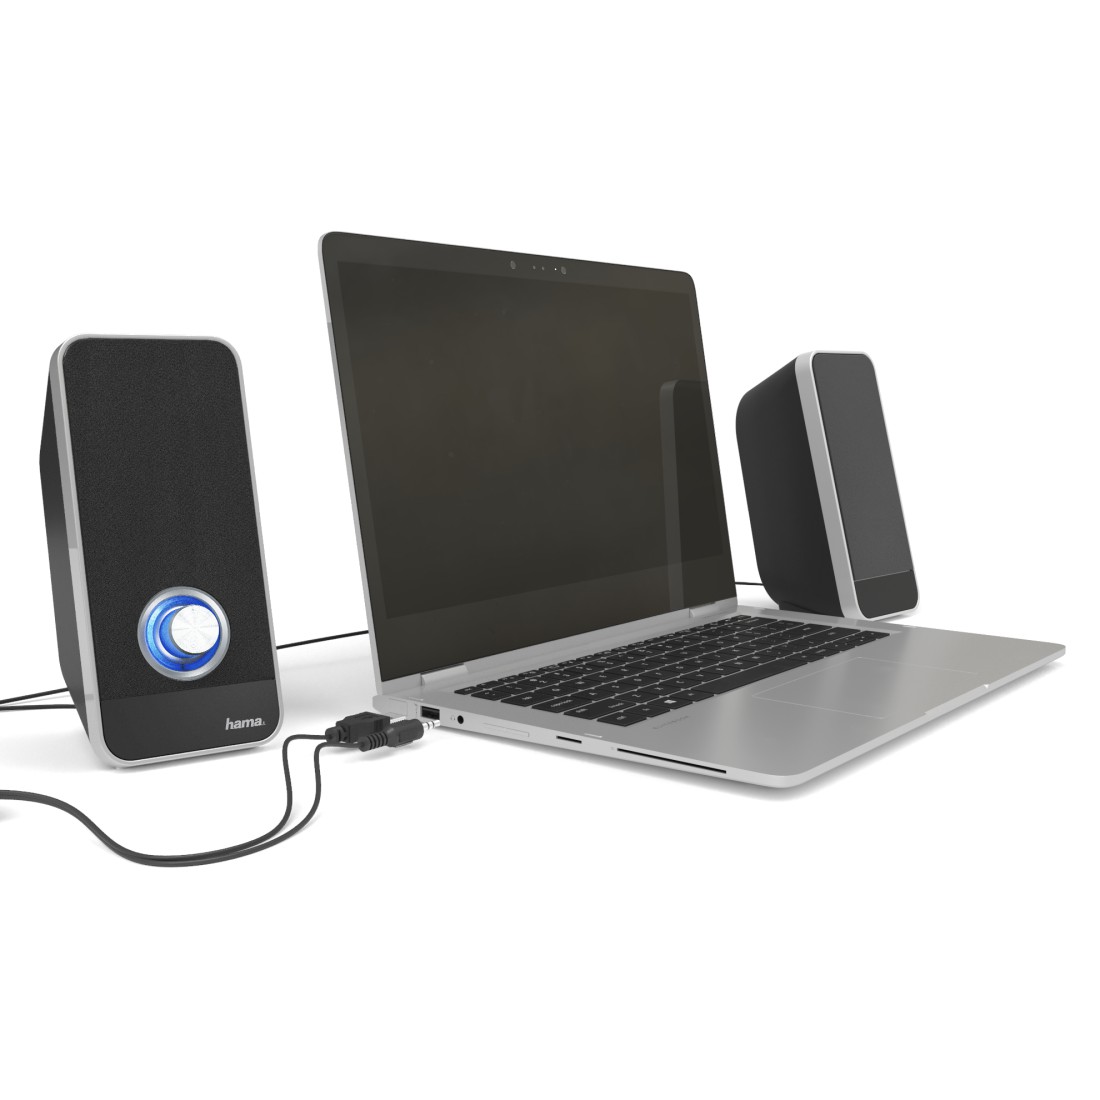 Hama Sonic LS-206 PC Speakers